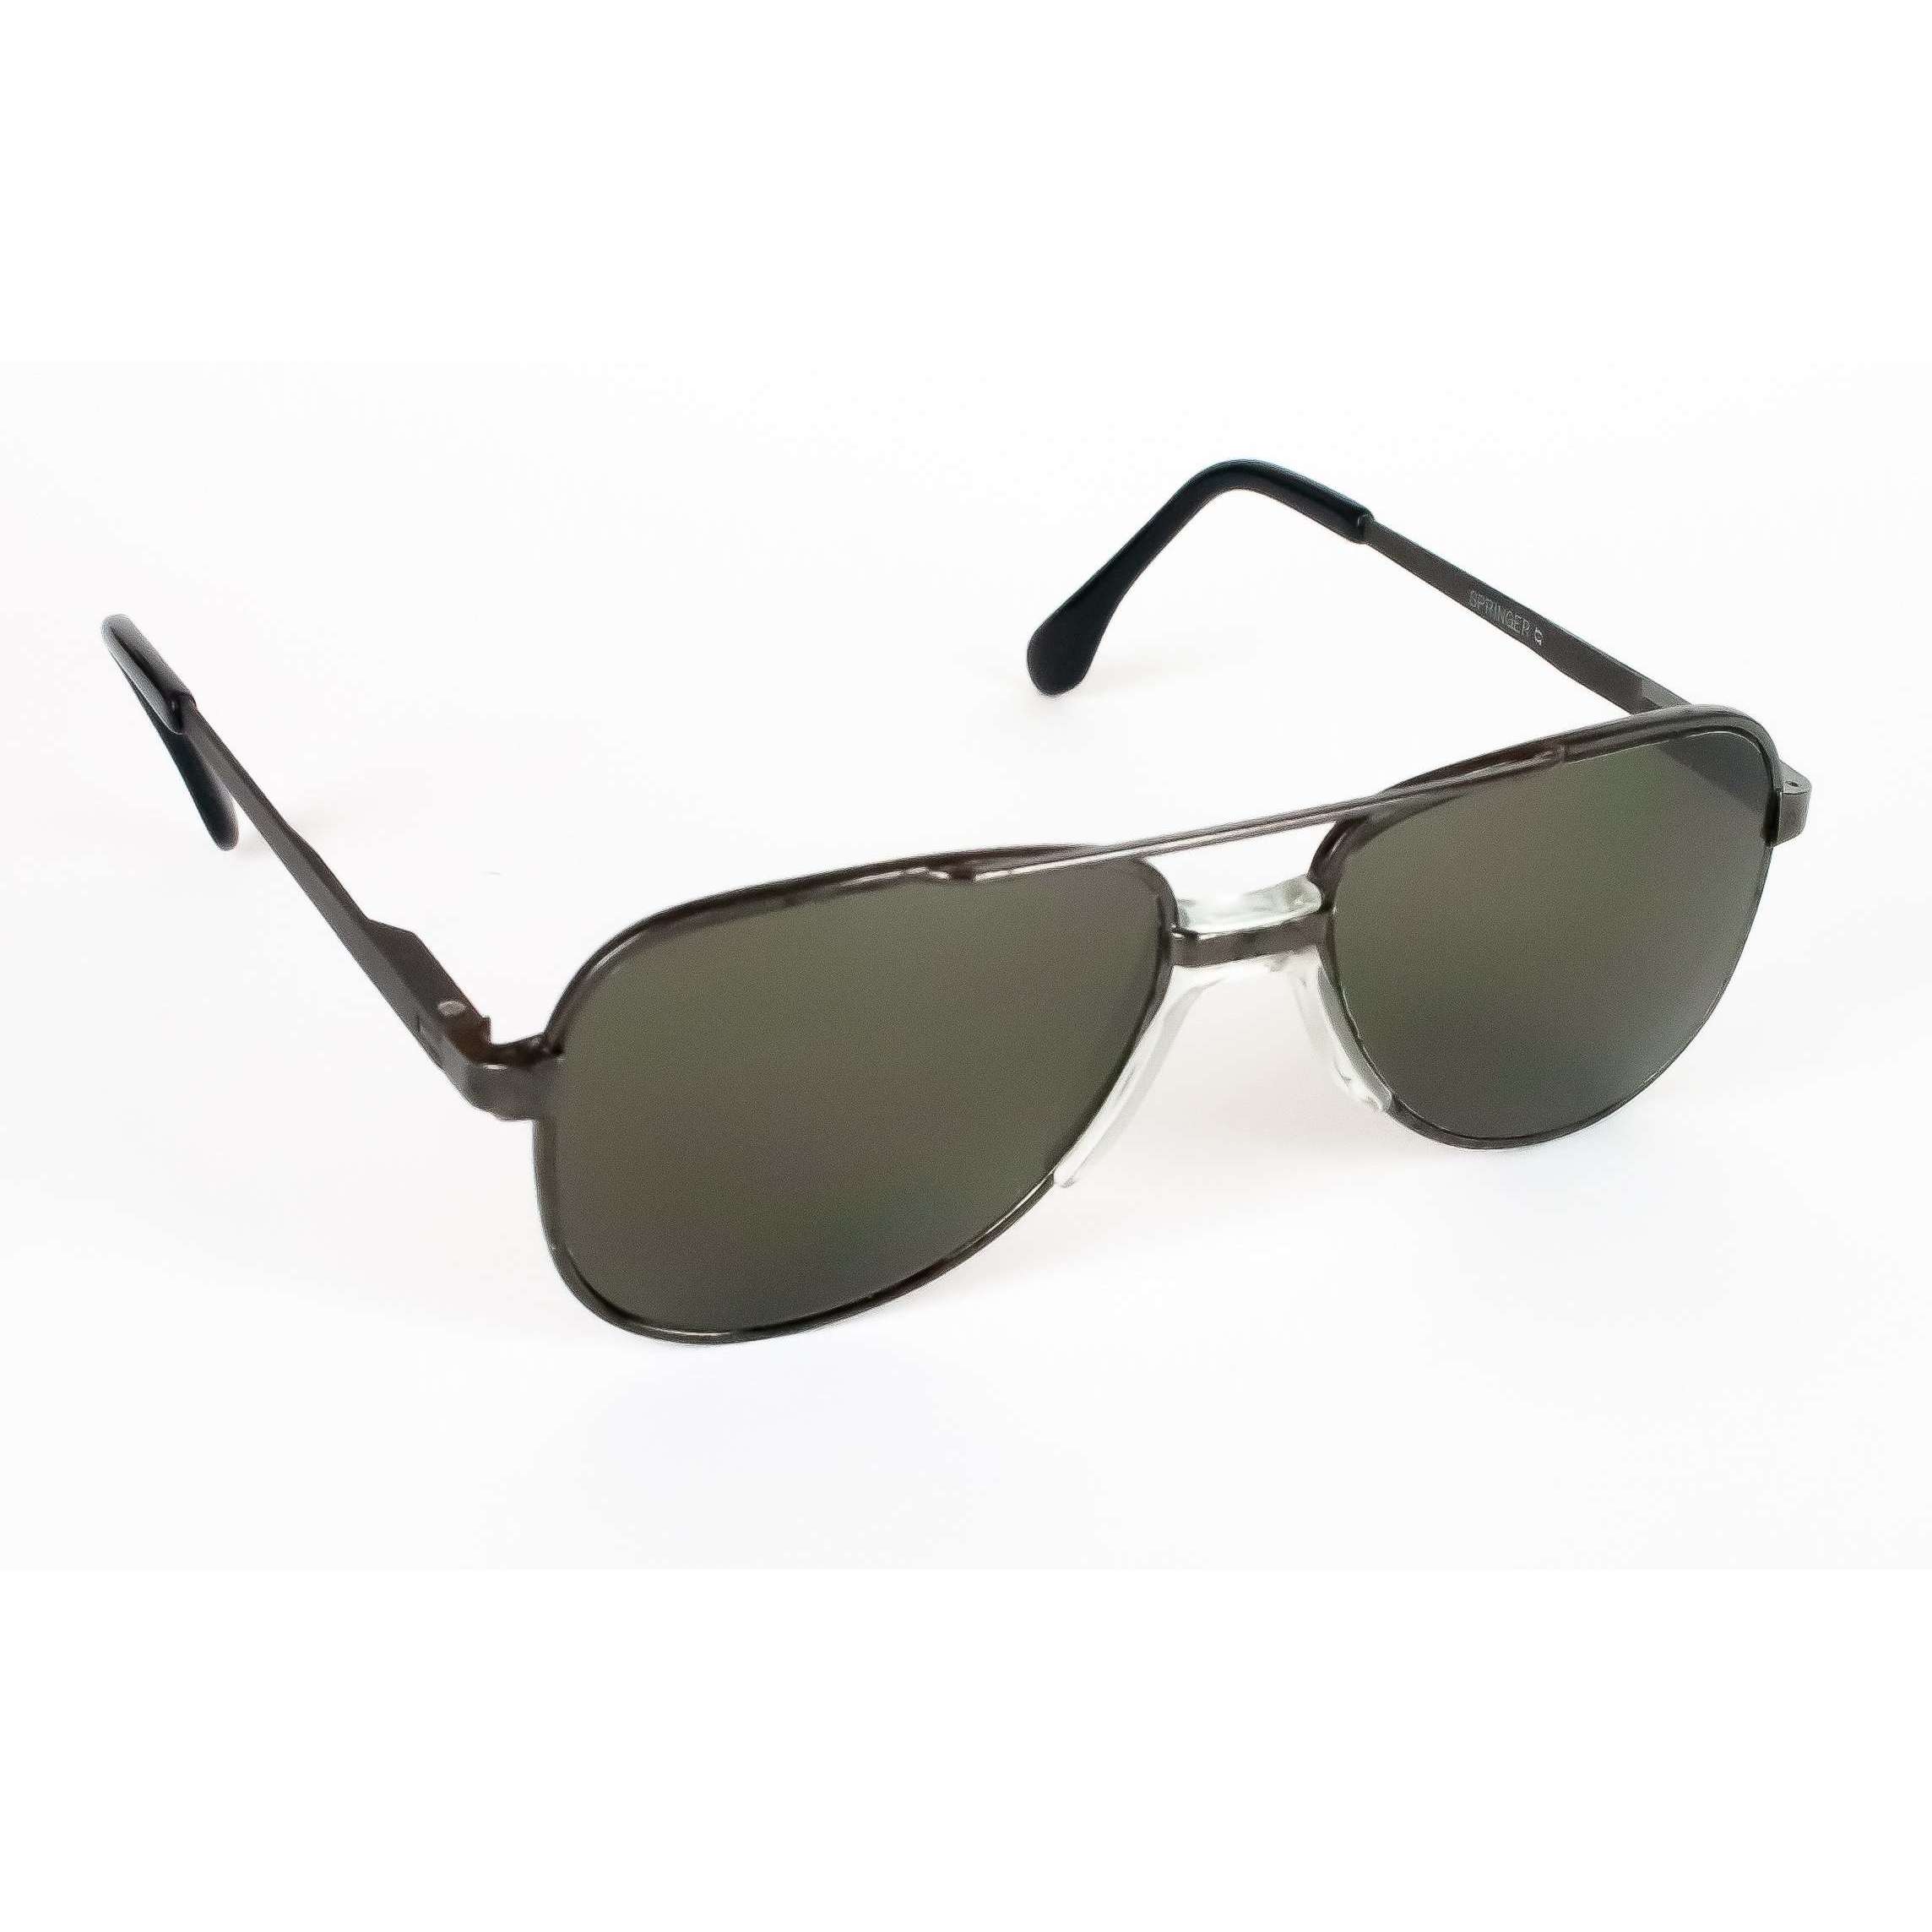 Little Rock Star Black Aviator-style Sunglasses